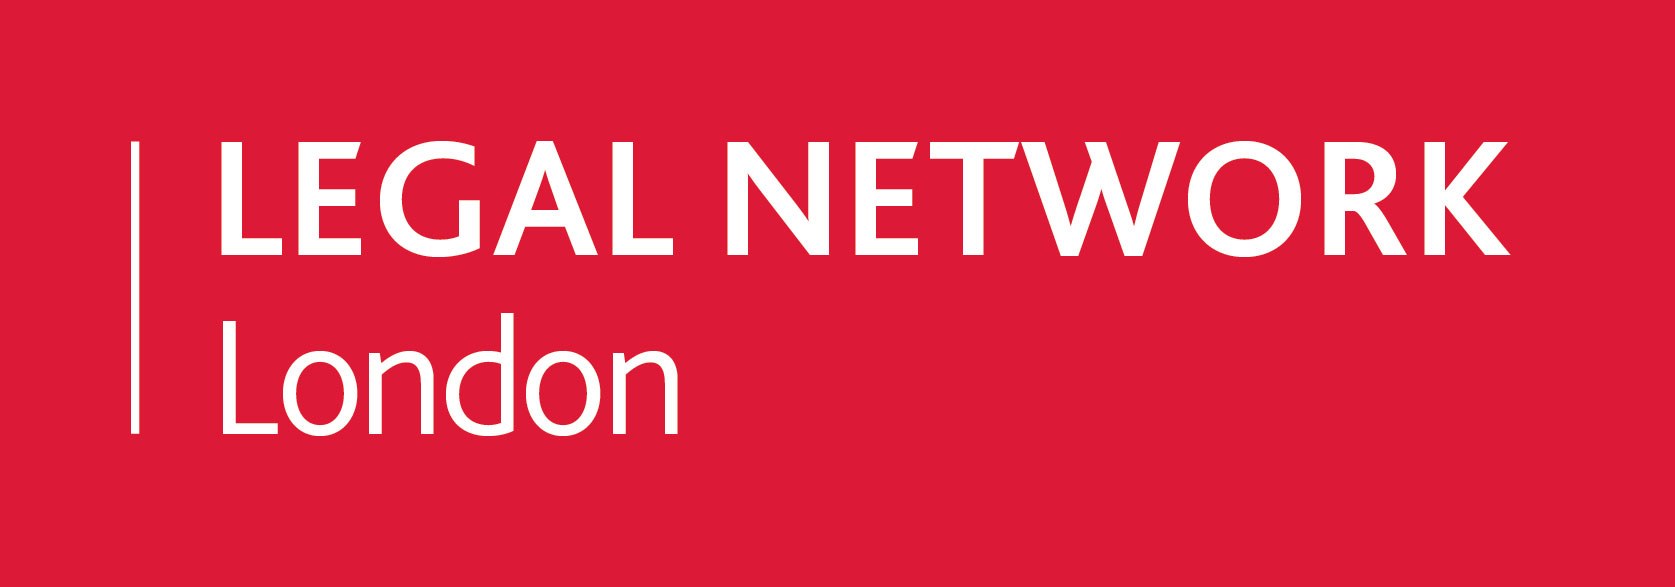 Legal Network London Logo